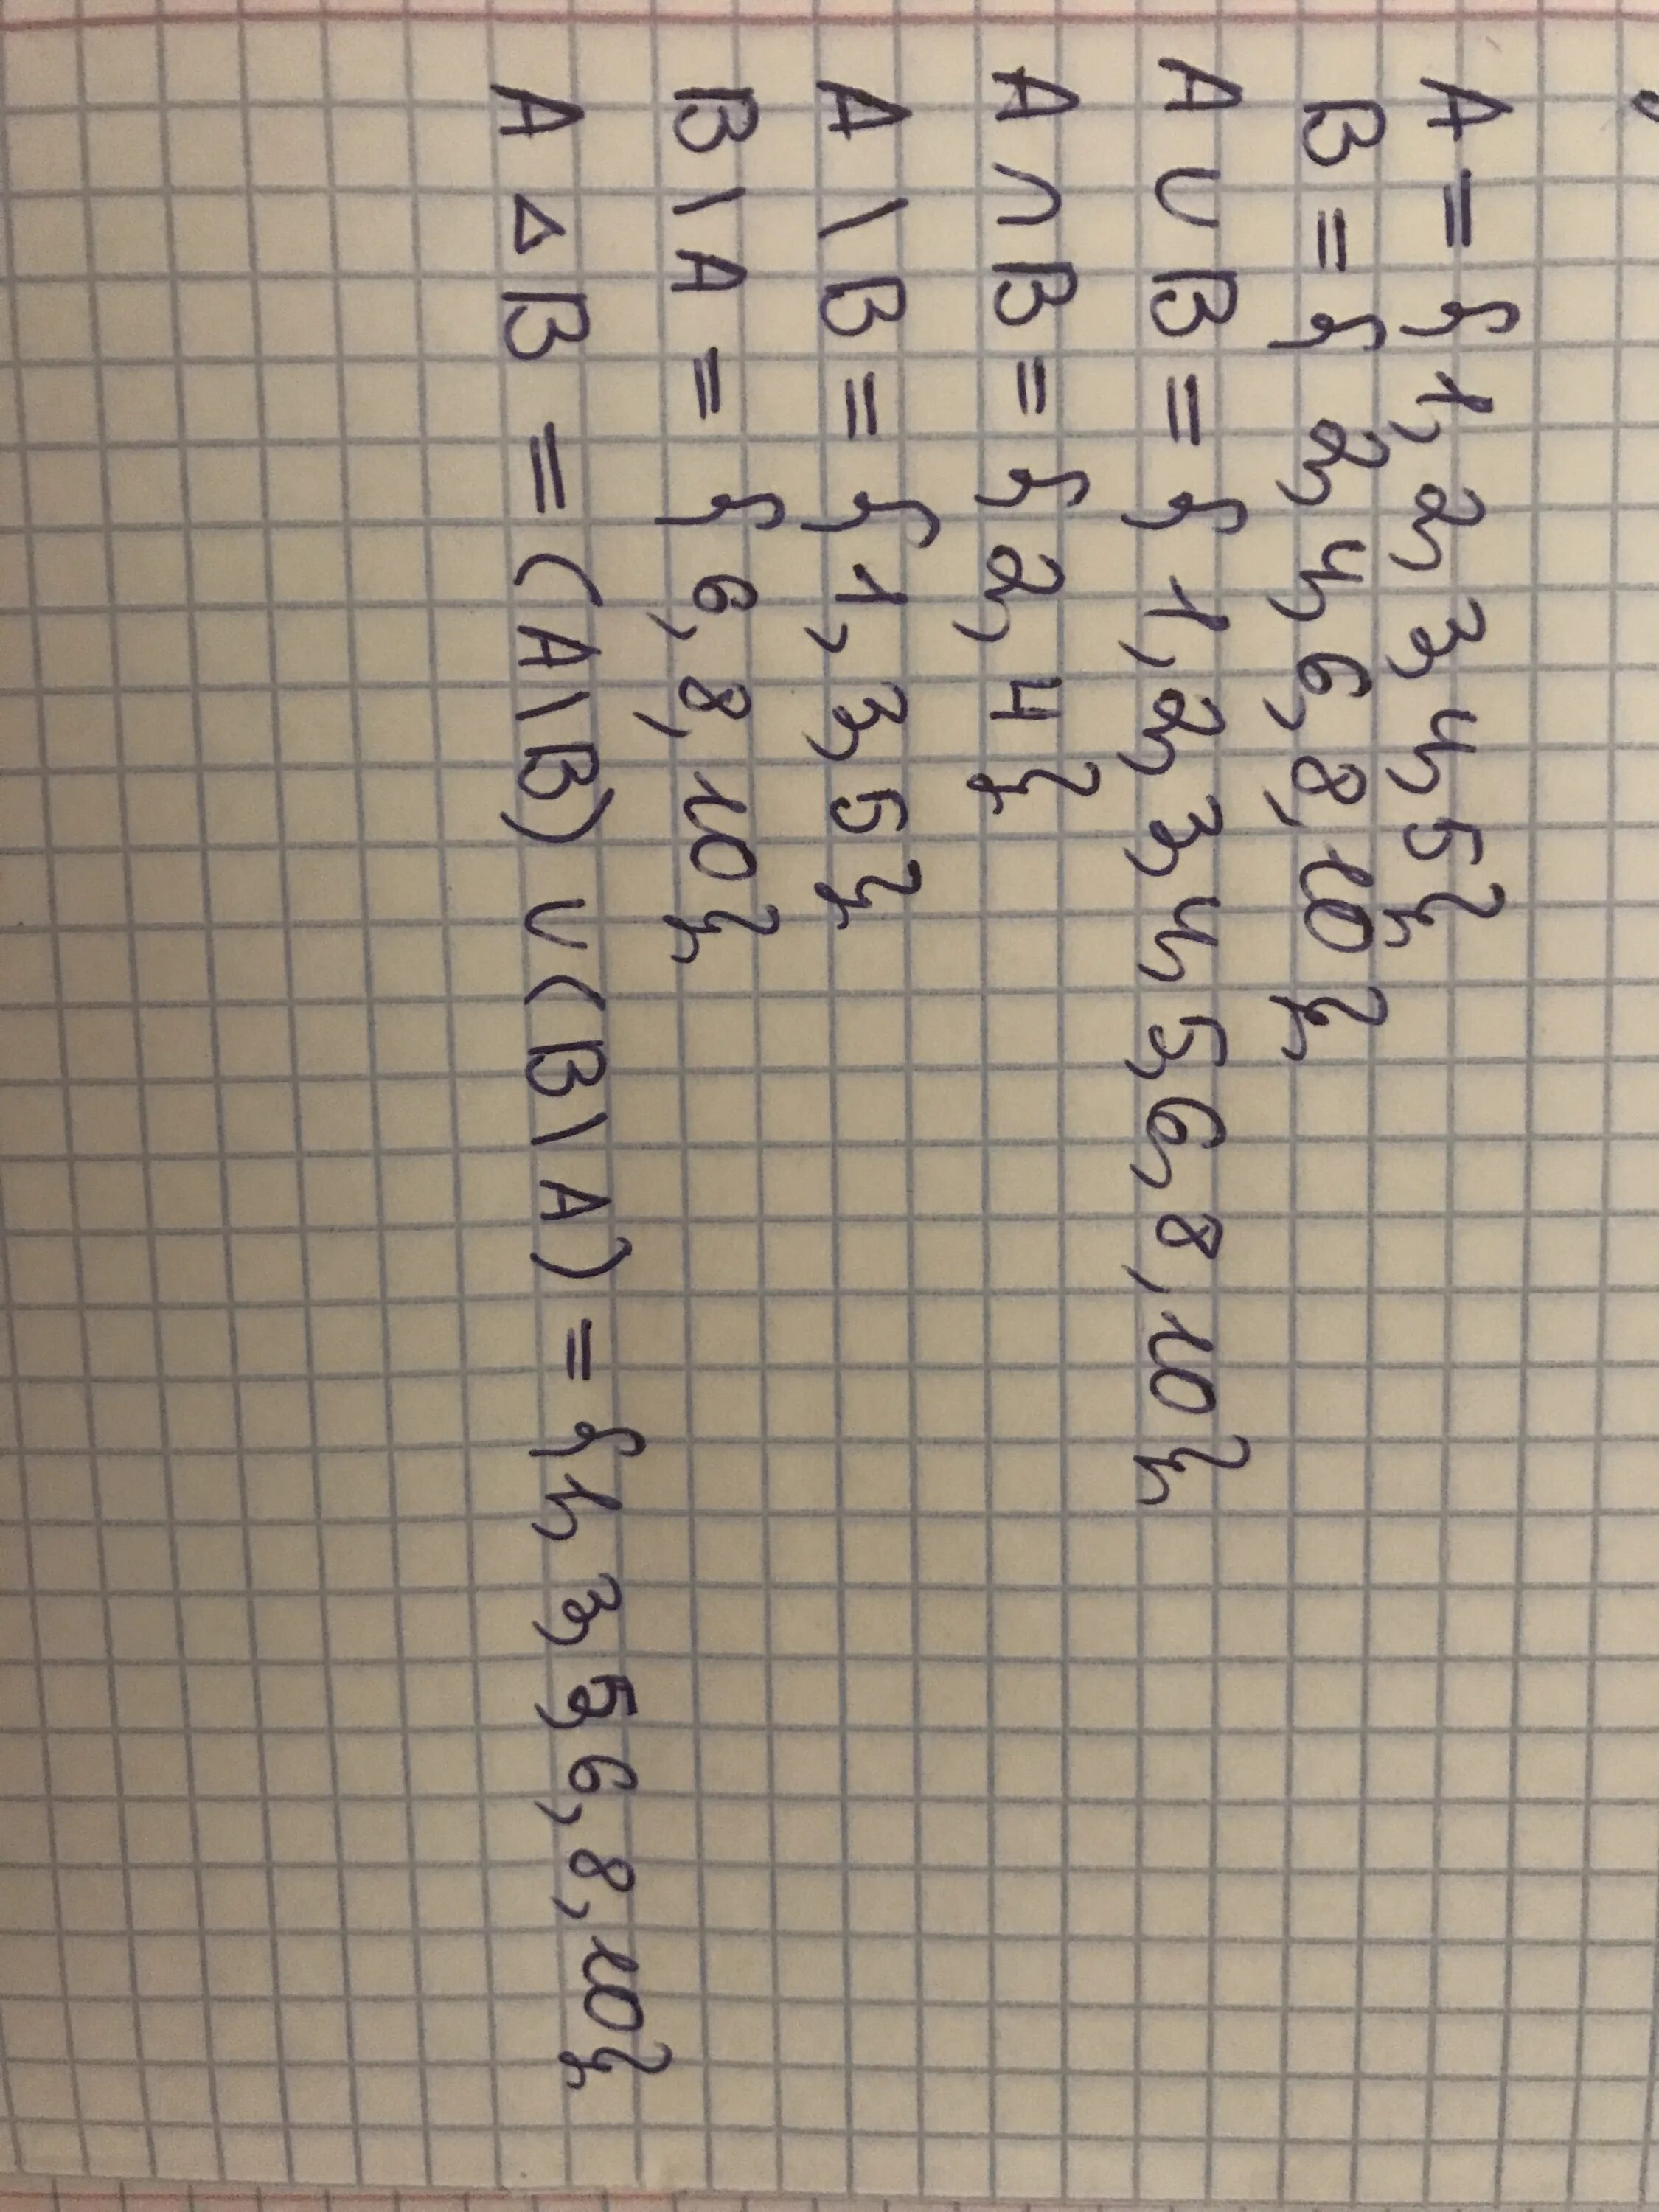 А2 3 в1. 2^5/2^-1. 1/3 И 2/3. 1/2*2/3*3/4. 2 5 6 1 3 = 6.